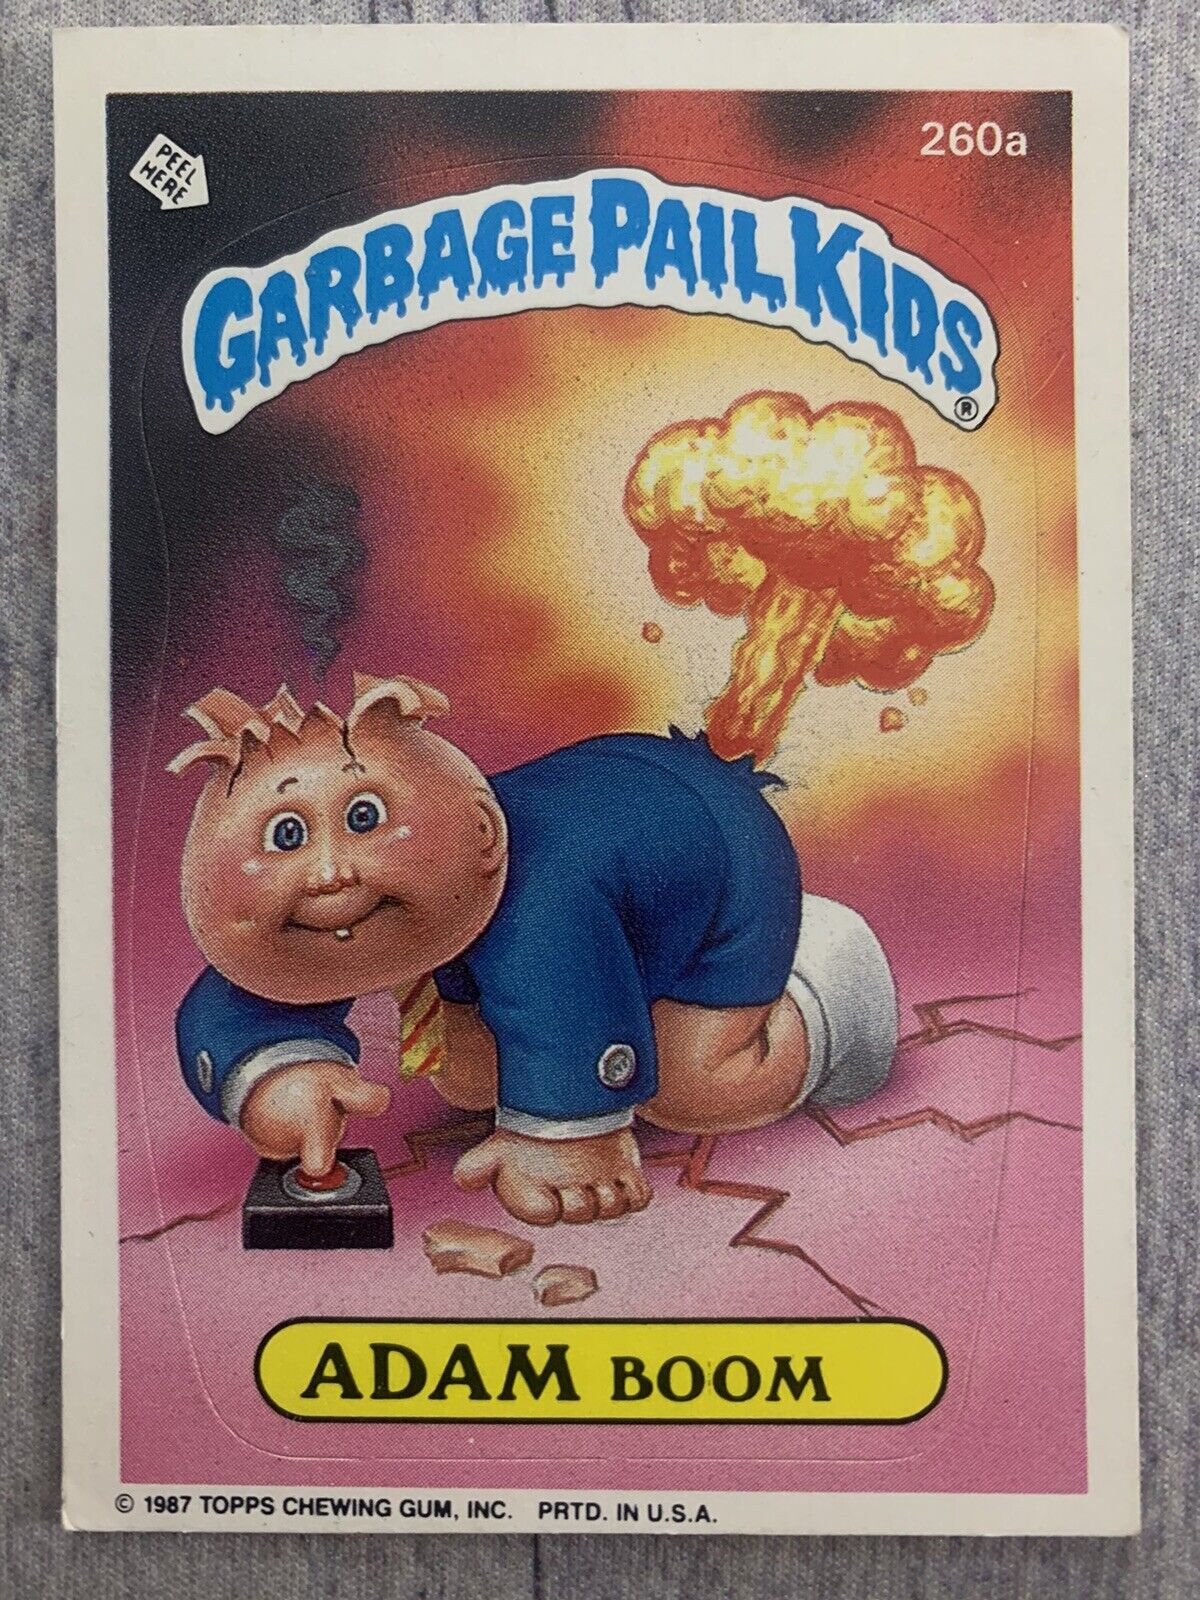 Vintage 1987 (GPK) Garbage Pail Kids Original Series 7 Adam Boom Card 260a